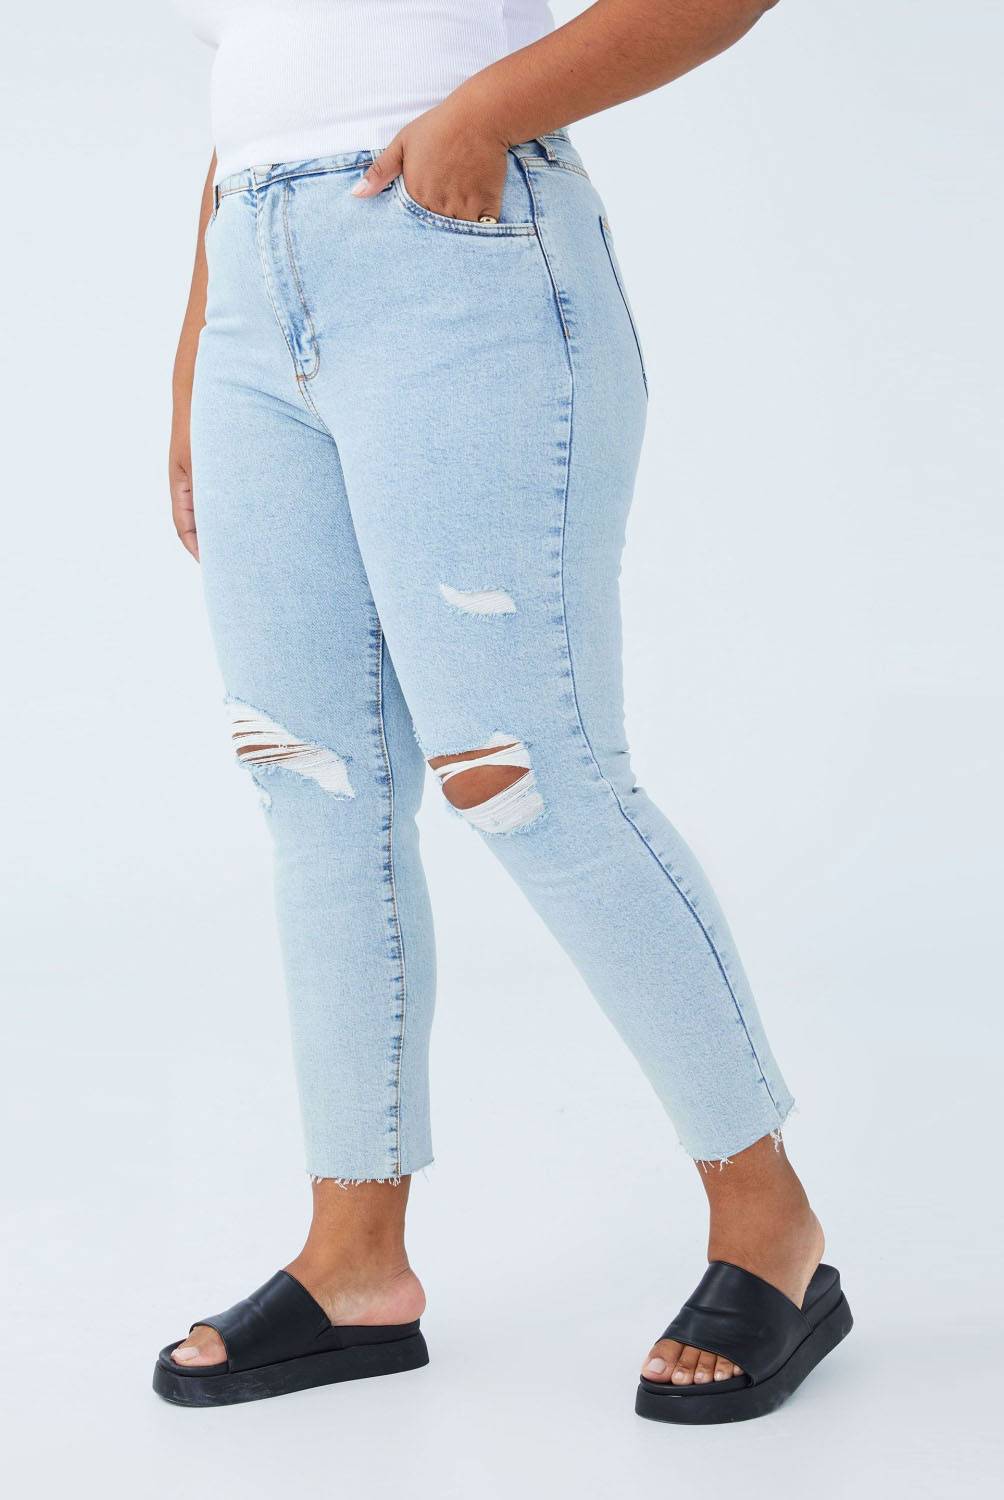 COTTON ON - Jeans Skinny Tiro Alto Mujer Cotton On